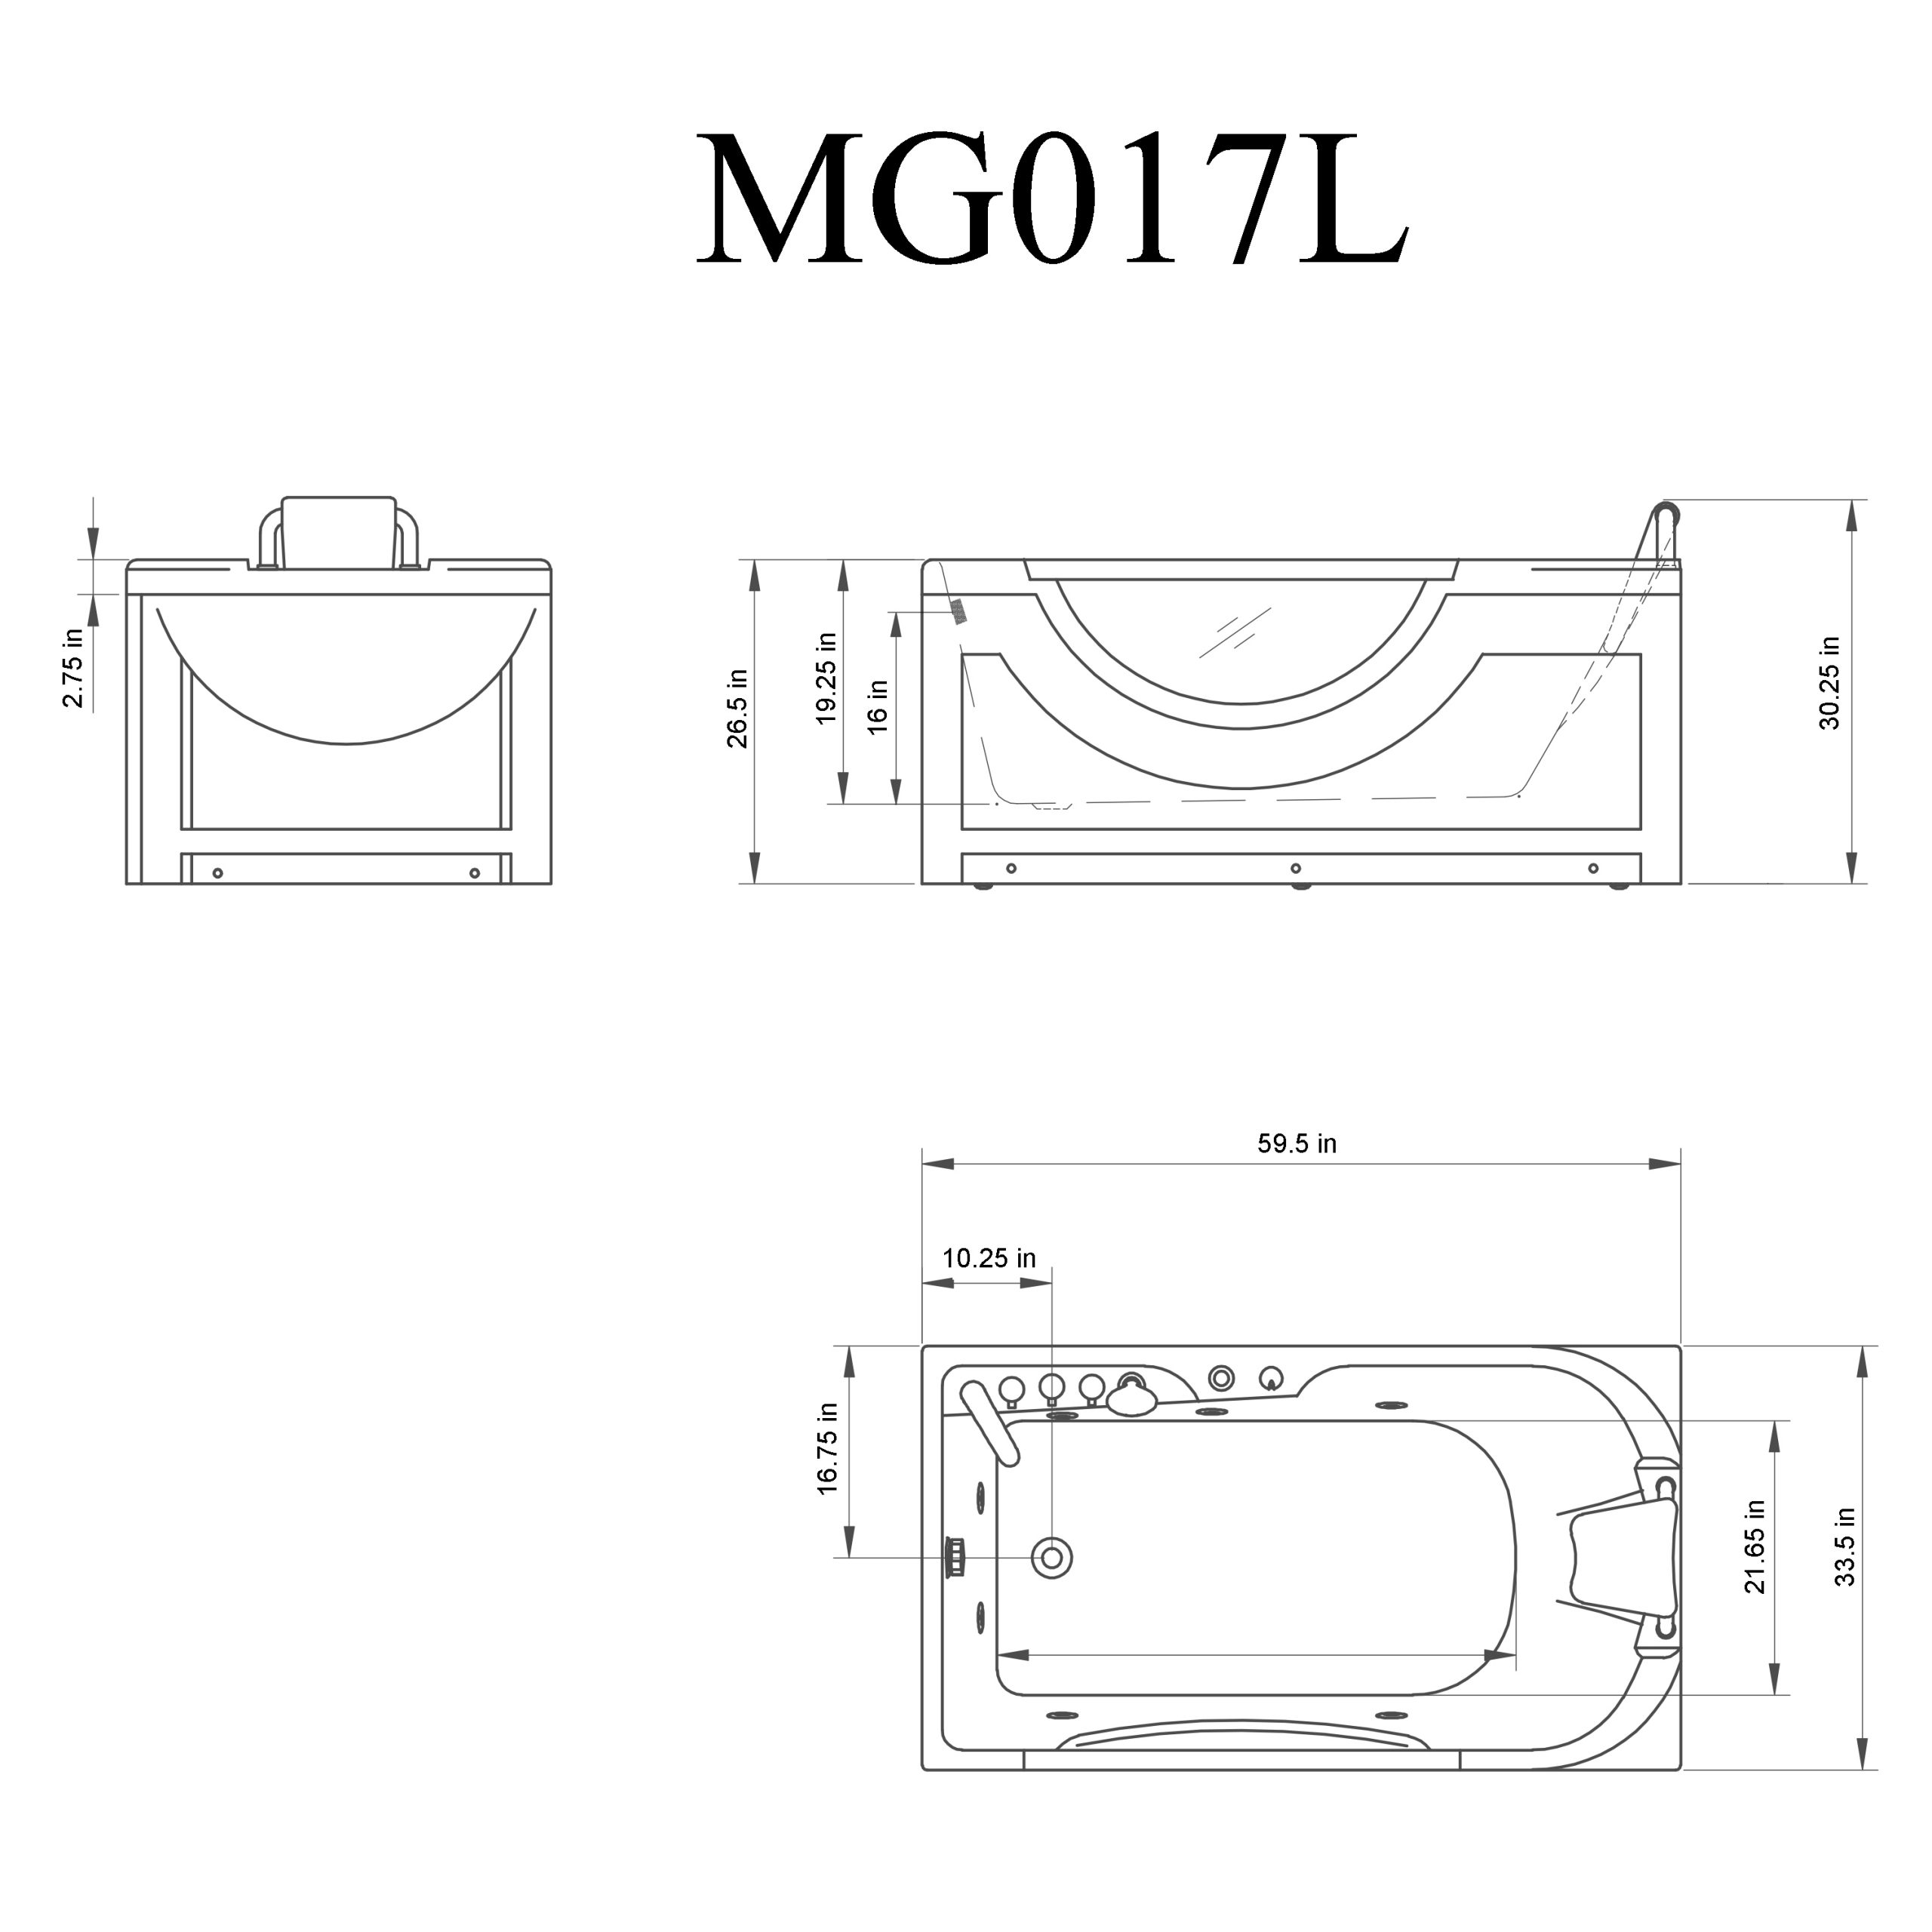 MG017L diagrams